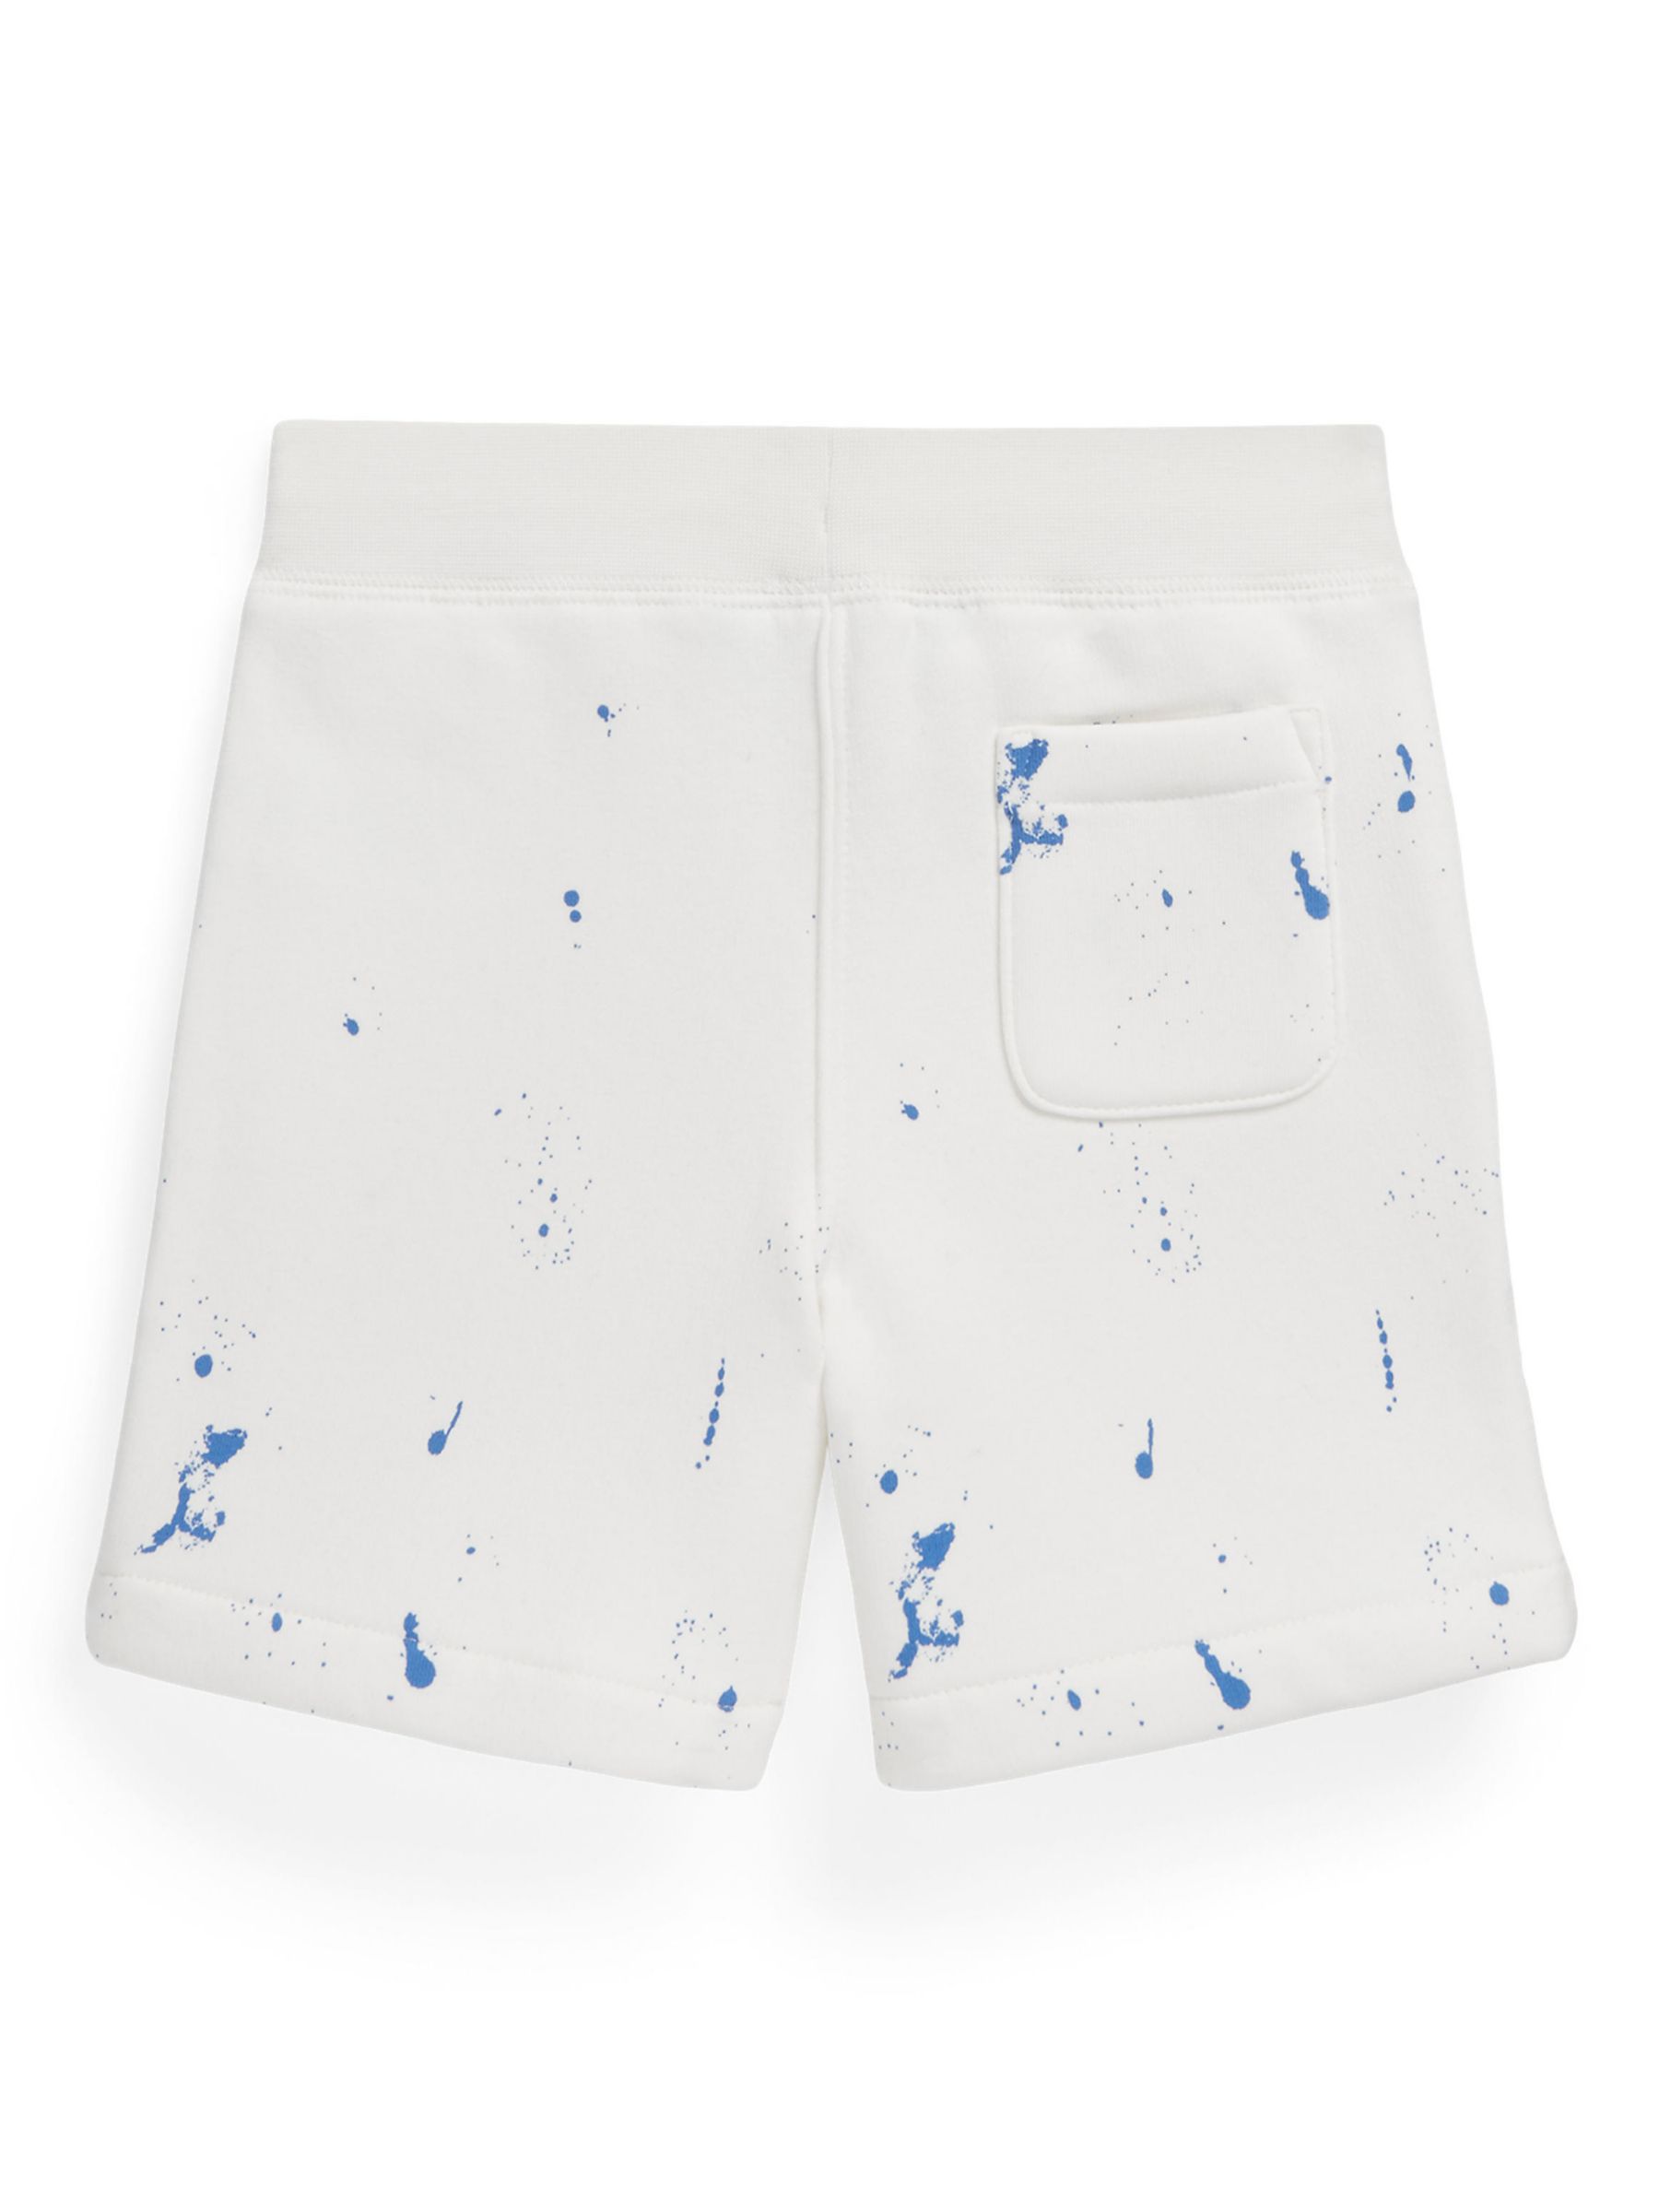 Ralph Lauren Kids' Athletic Paint Splater Print Shorts, Deckwash White, M